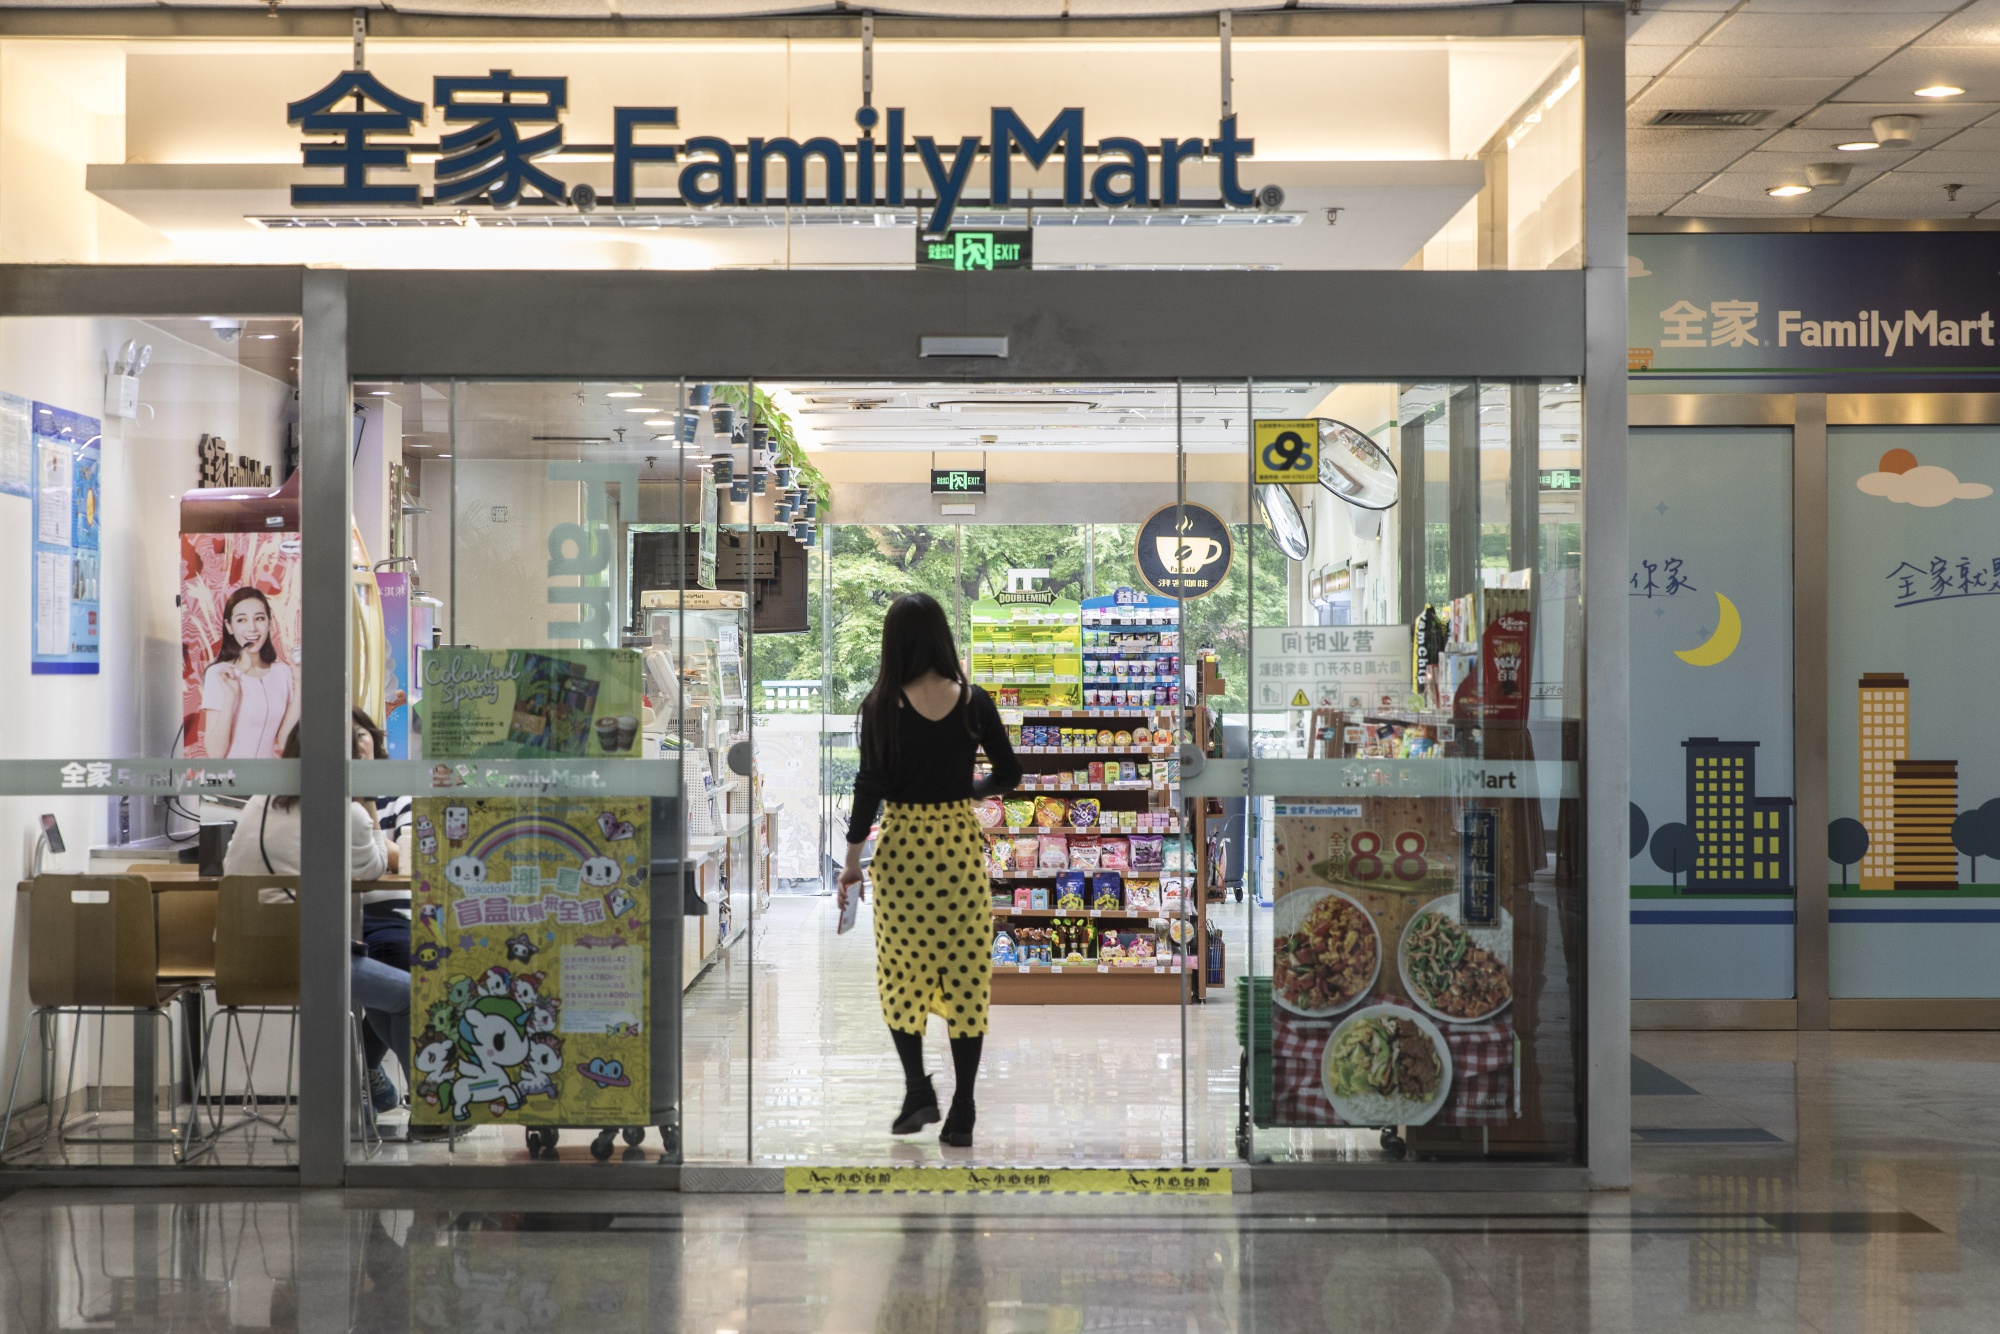 A FamilyMart store in Shanghai.